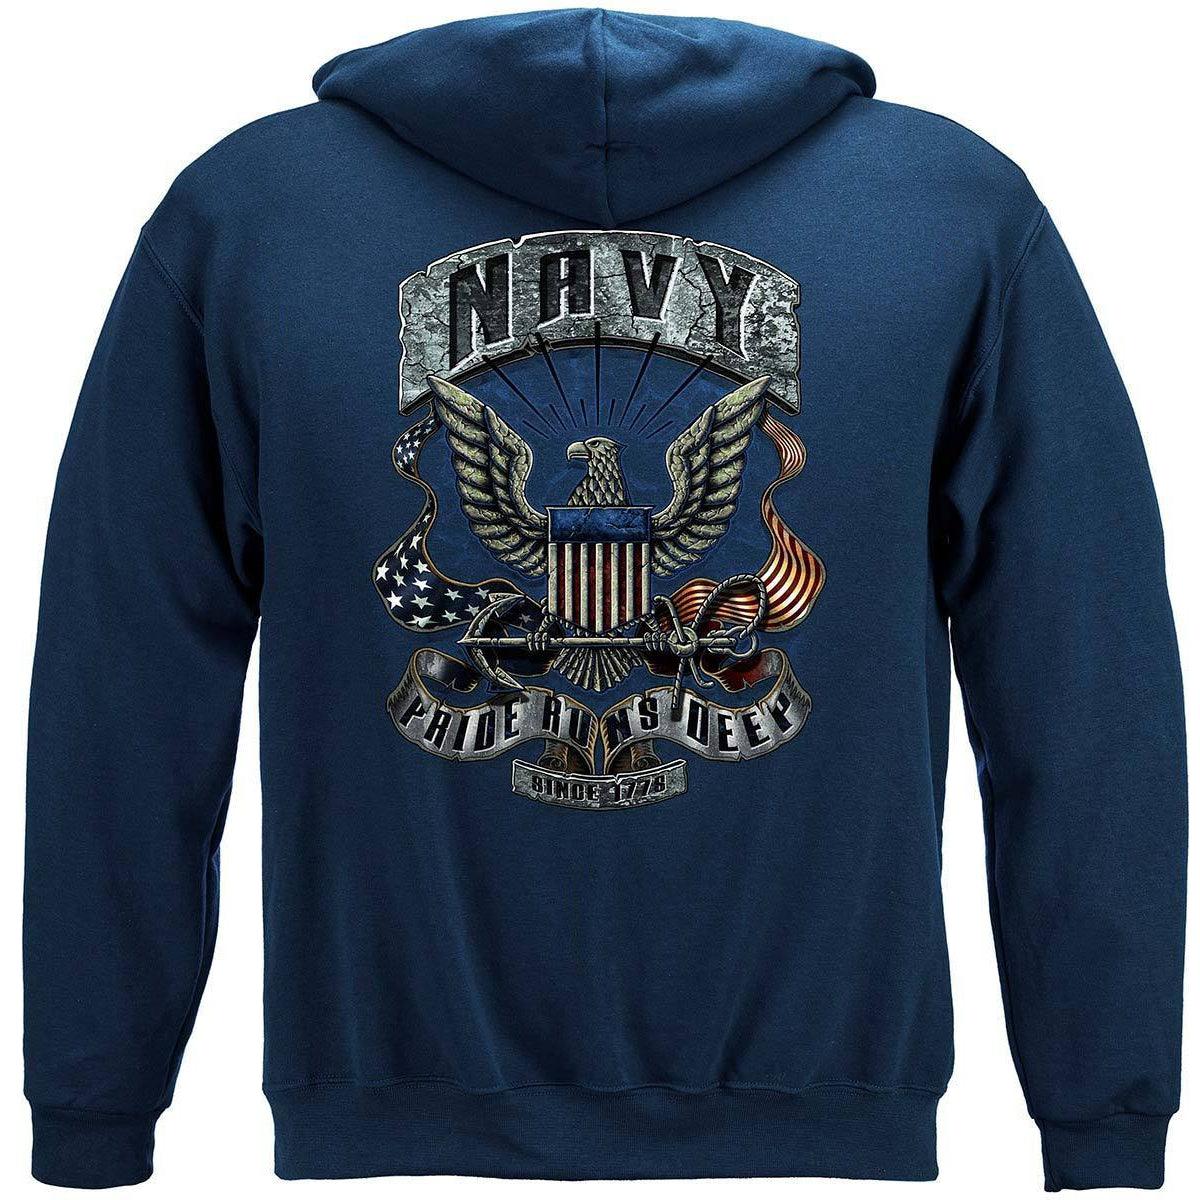 Navy Eagle On Stone Premium T-Shirt - Military Republic